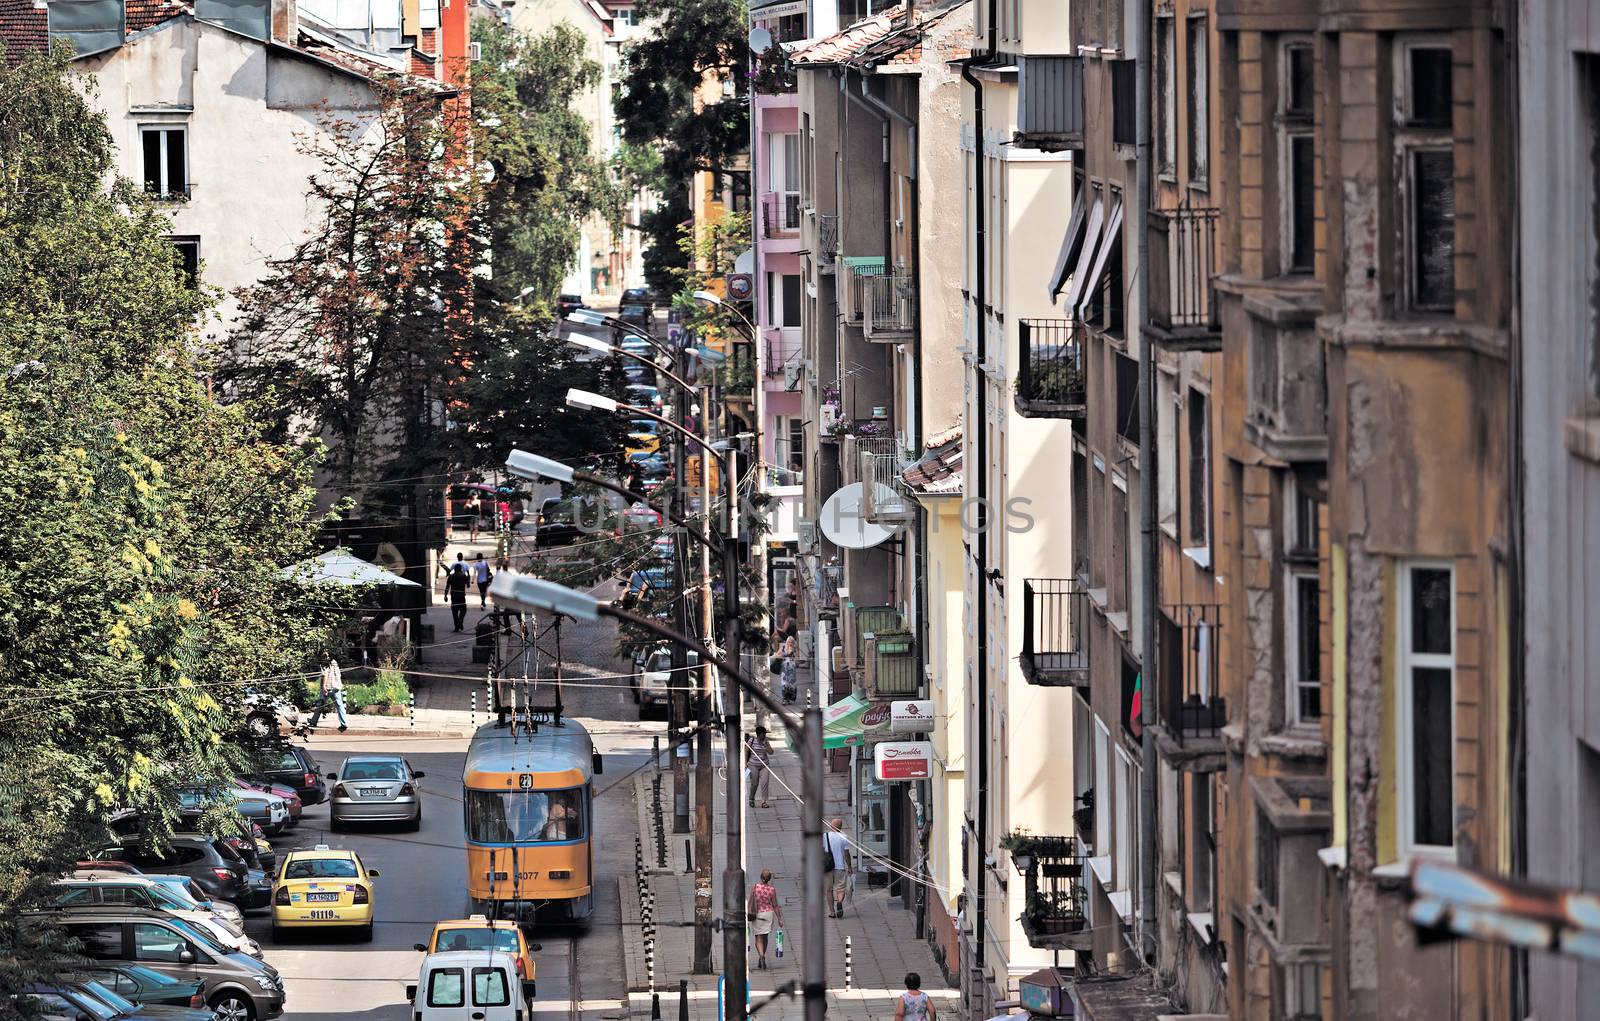 Sofia Bulgaria general street view by vilevi